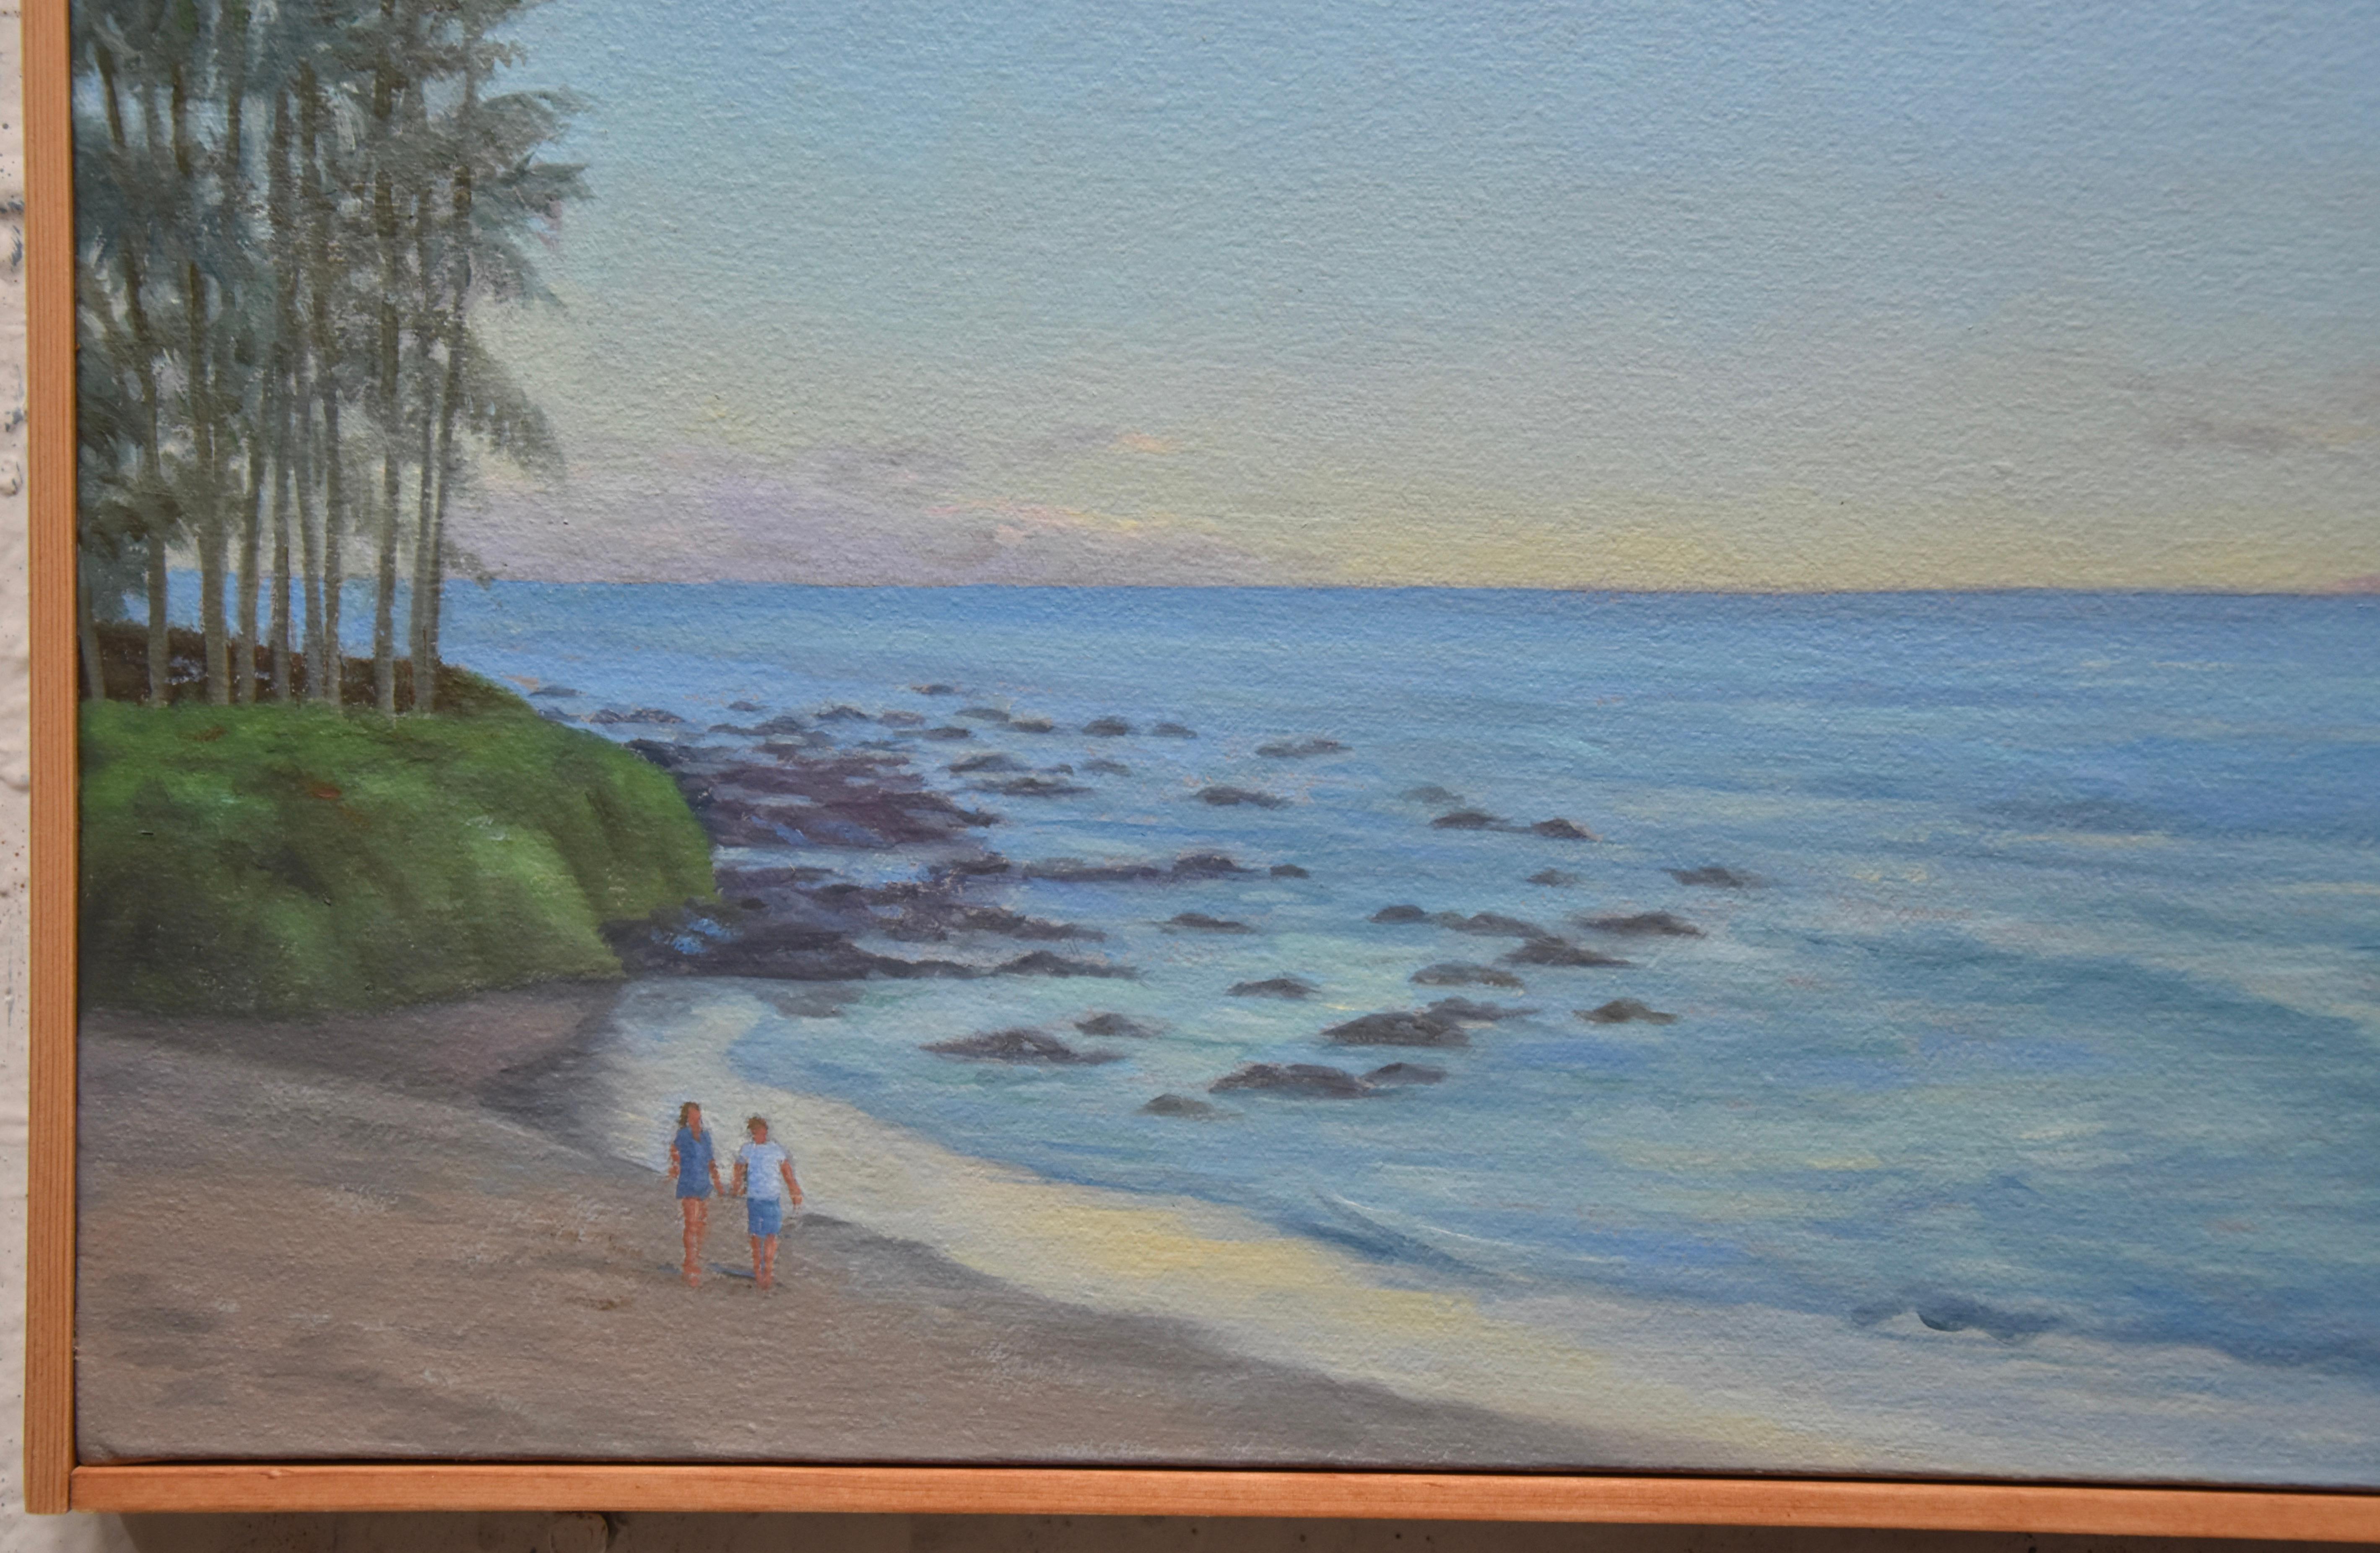 Molokai - Hawaiian Island ocean beach scene at dusk - Painting by Willard Dixon